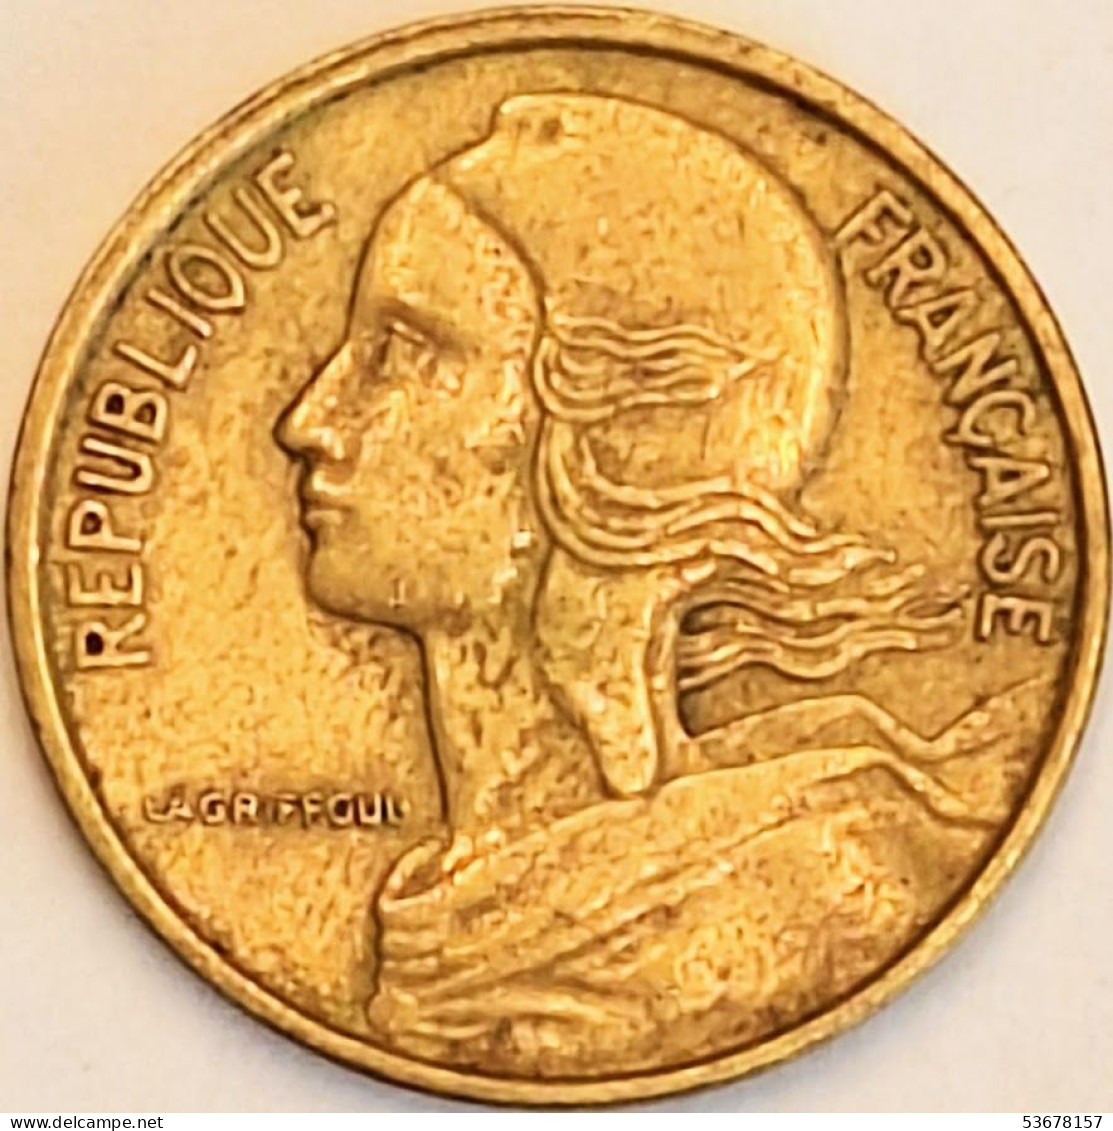 France - 5 Centimes 1967, KM# 933 (#4184) - 5 Centimes